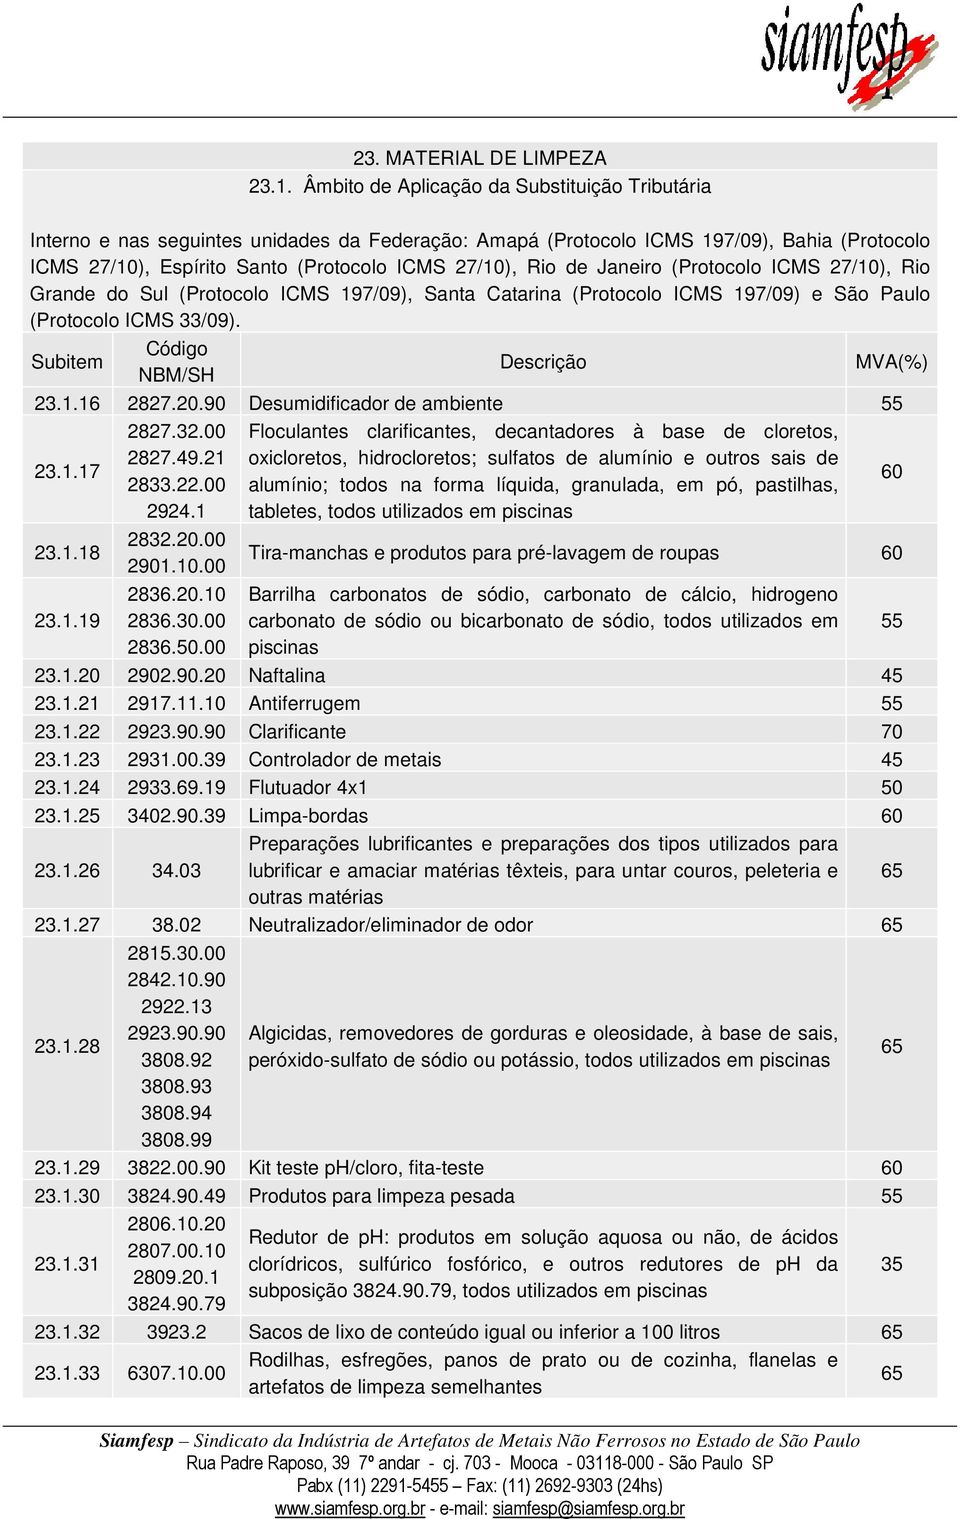 de Janeiro (Protocolo ICMS 27/10), Rio Grande do Sul (Protocolo ICMS 197/09), Santa Catarina (Protocolo ICMS 197/09) e São Paulo (Protocolo ICMS 33/09). 23.1.16 2827.20.